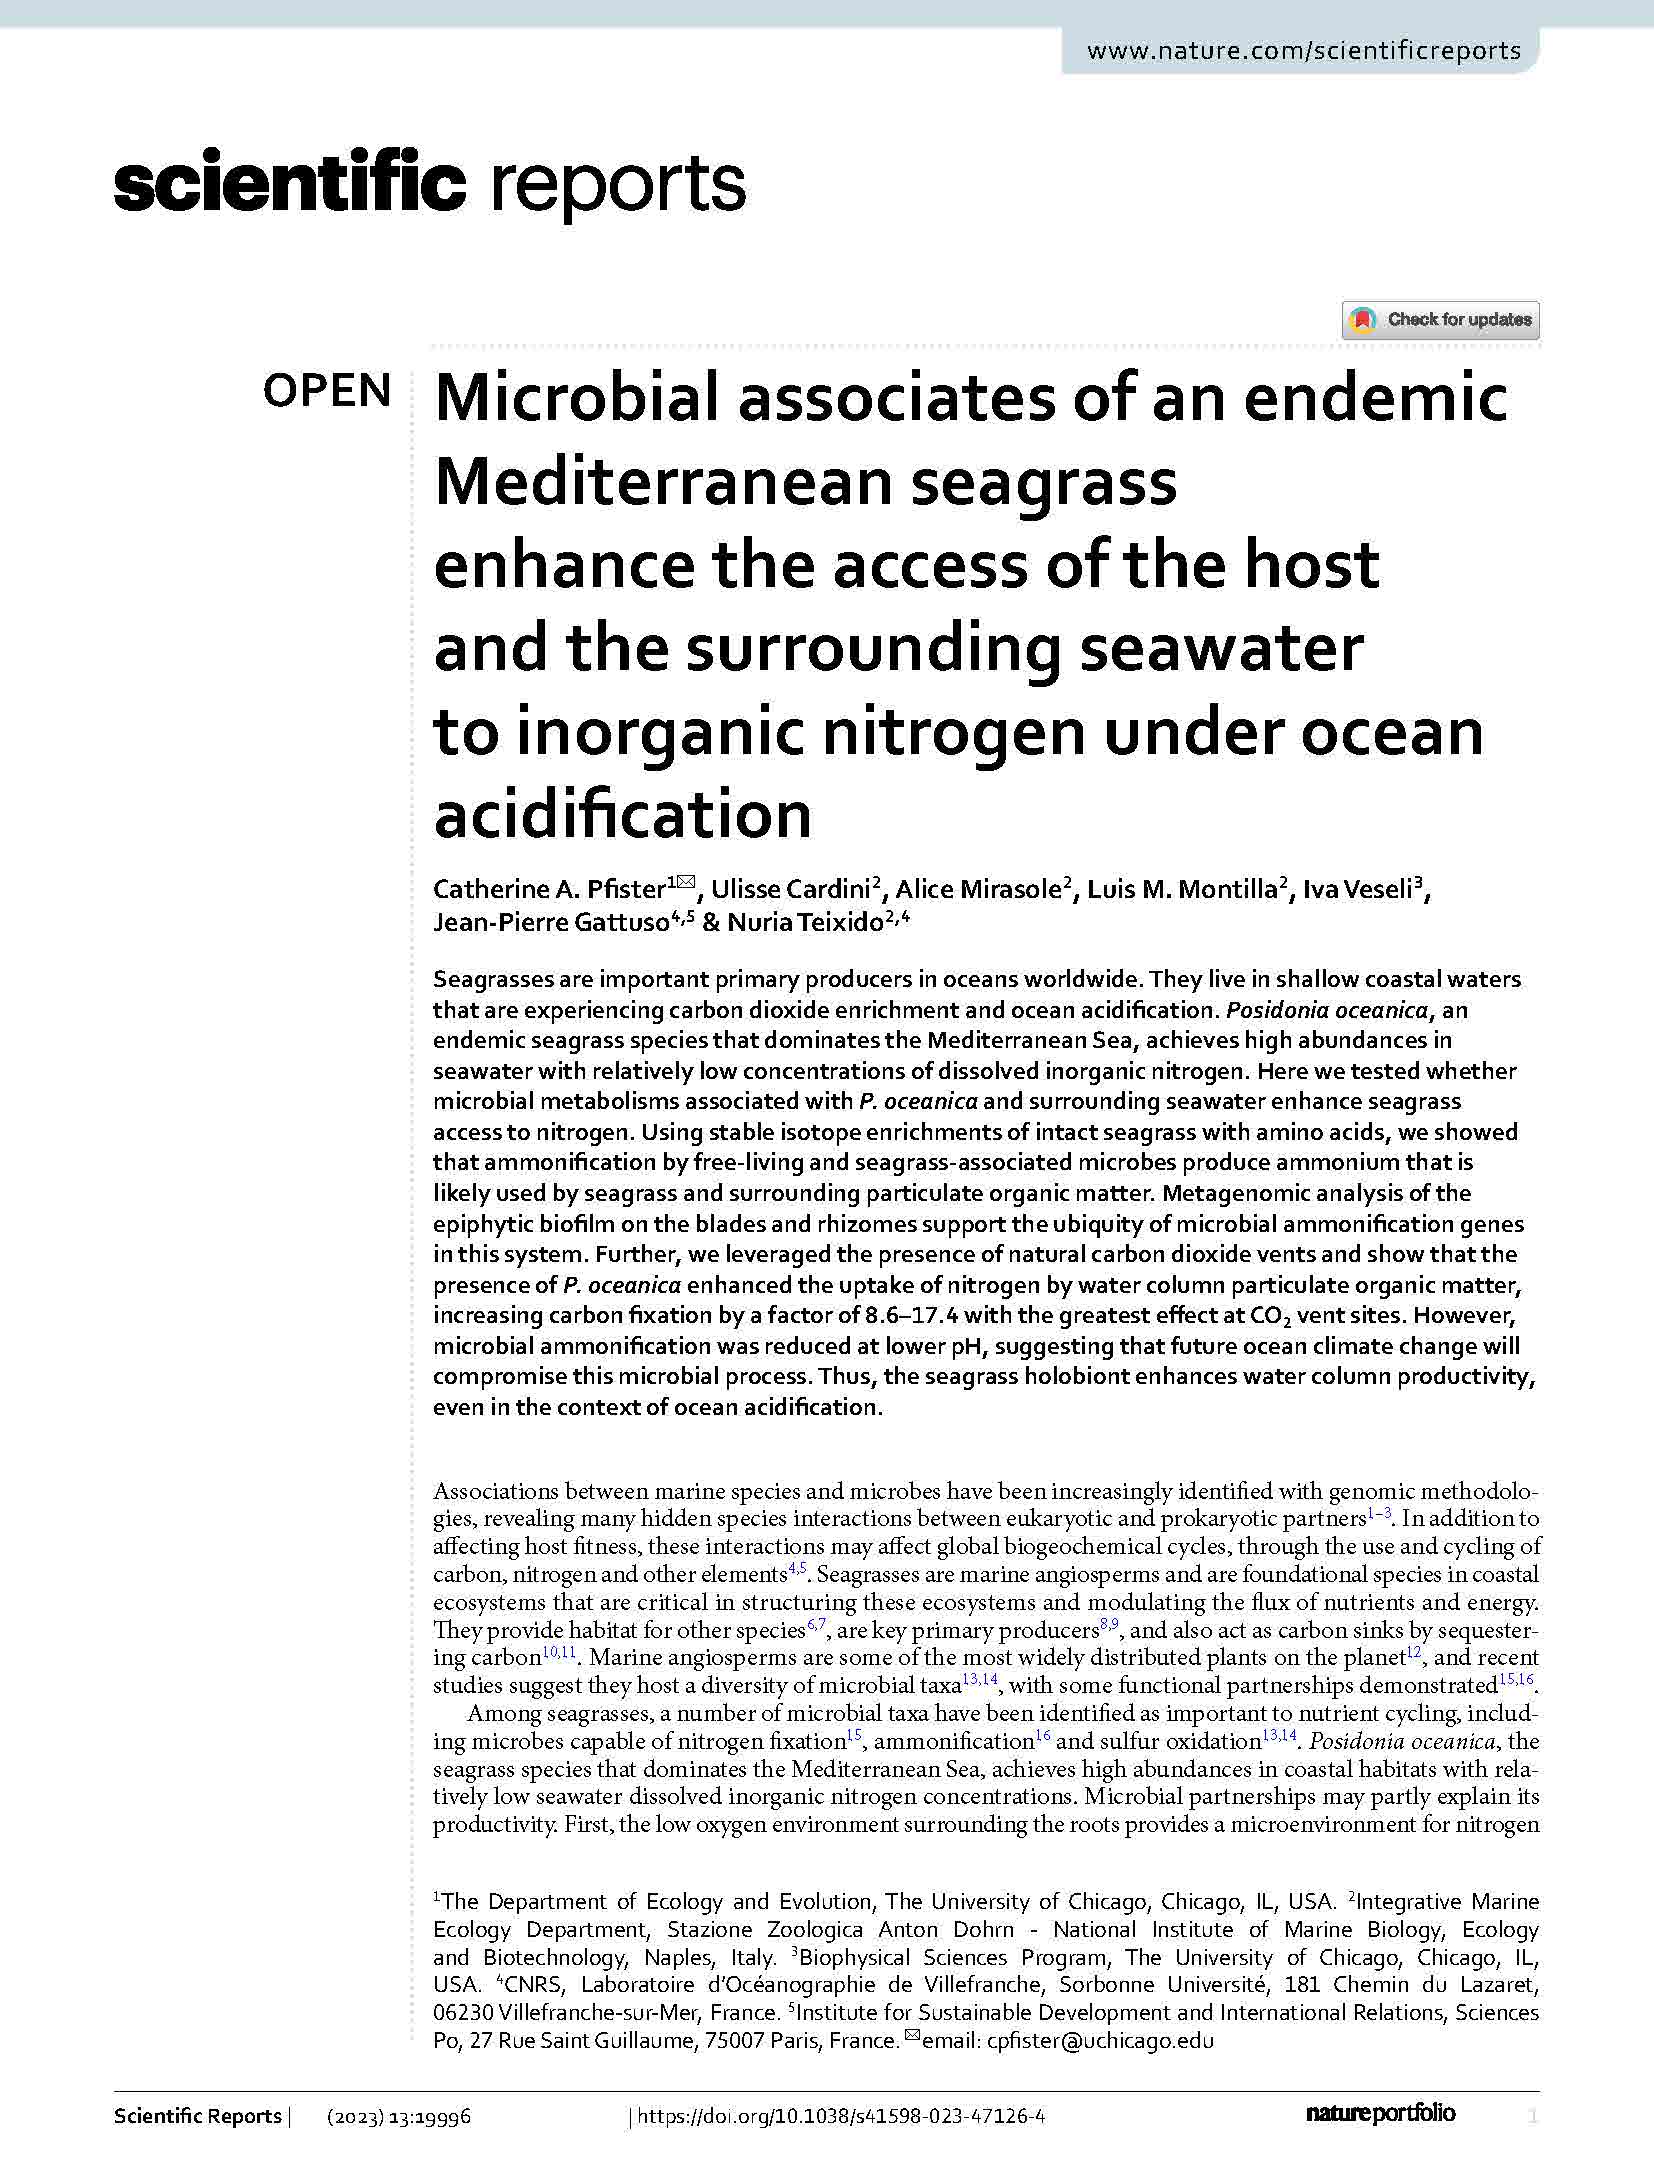 Pfisteretal 2023 Microbial associates Posidonia Ischia Scie Reports